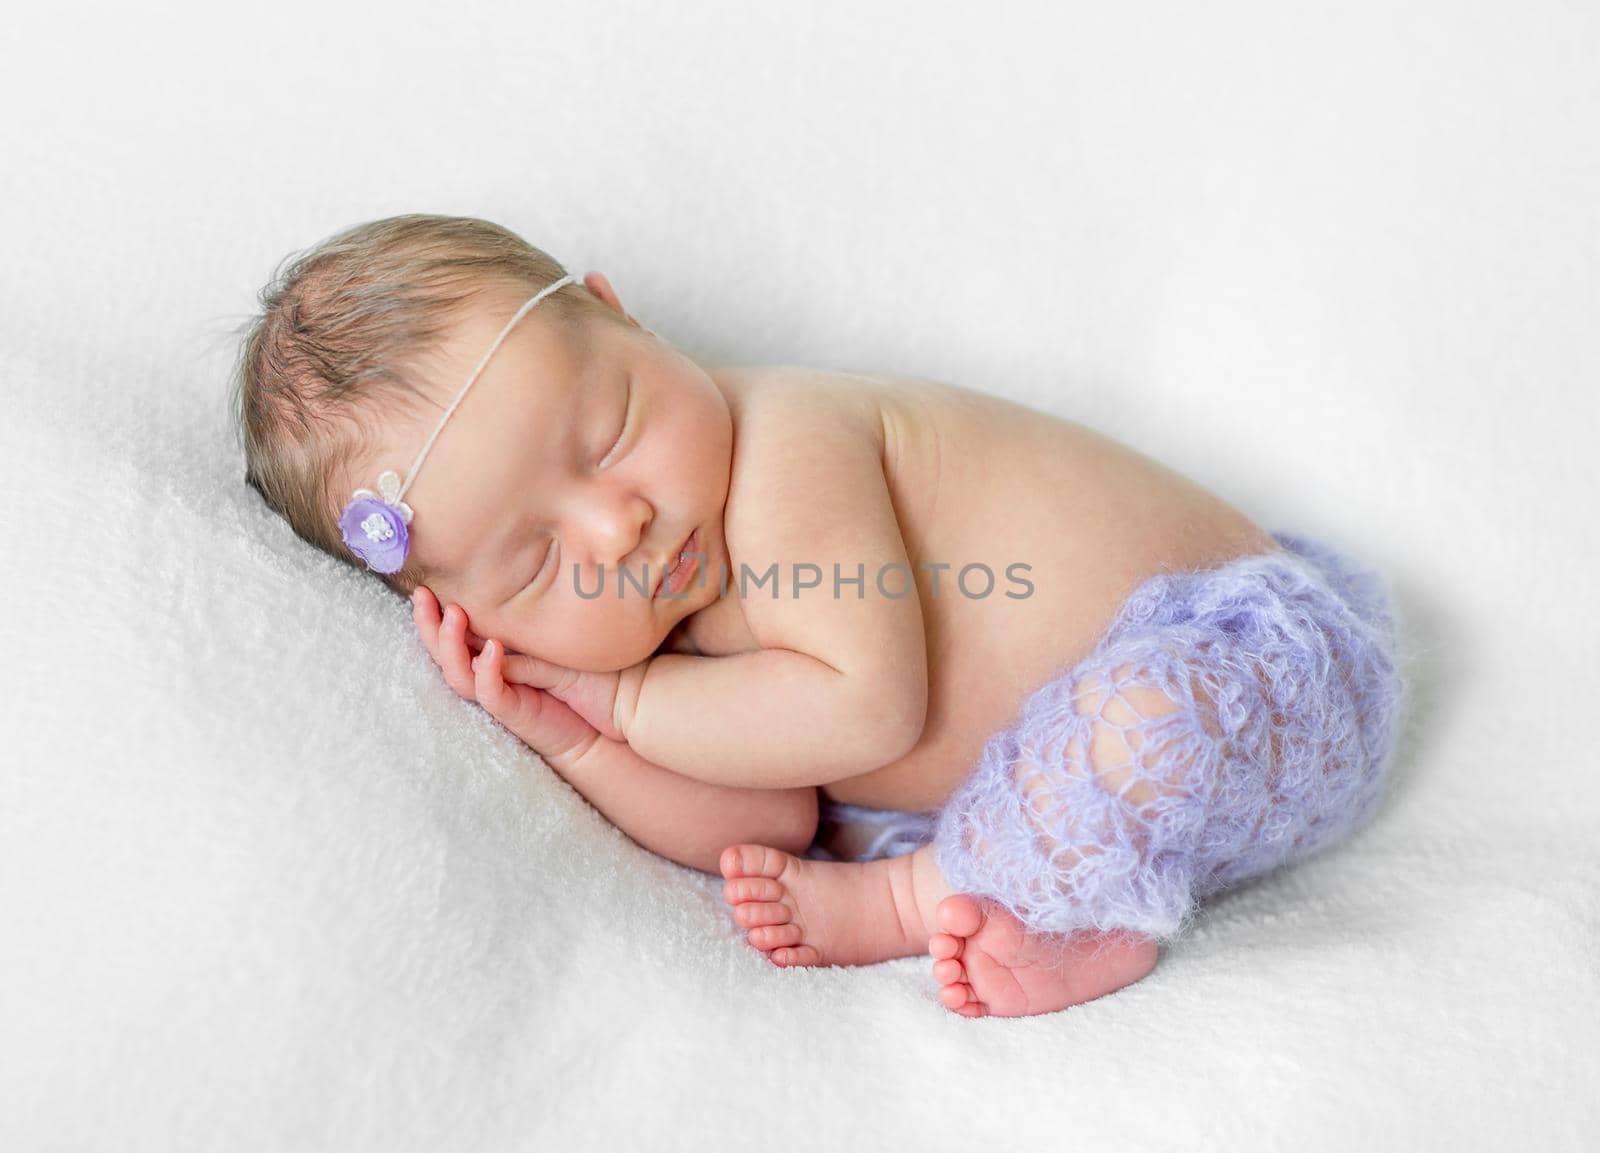 lovely sleeping newborn with hands under head in violet panties by tan4ikk1